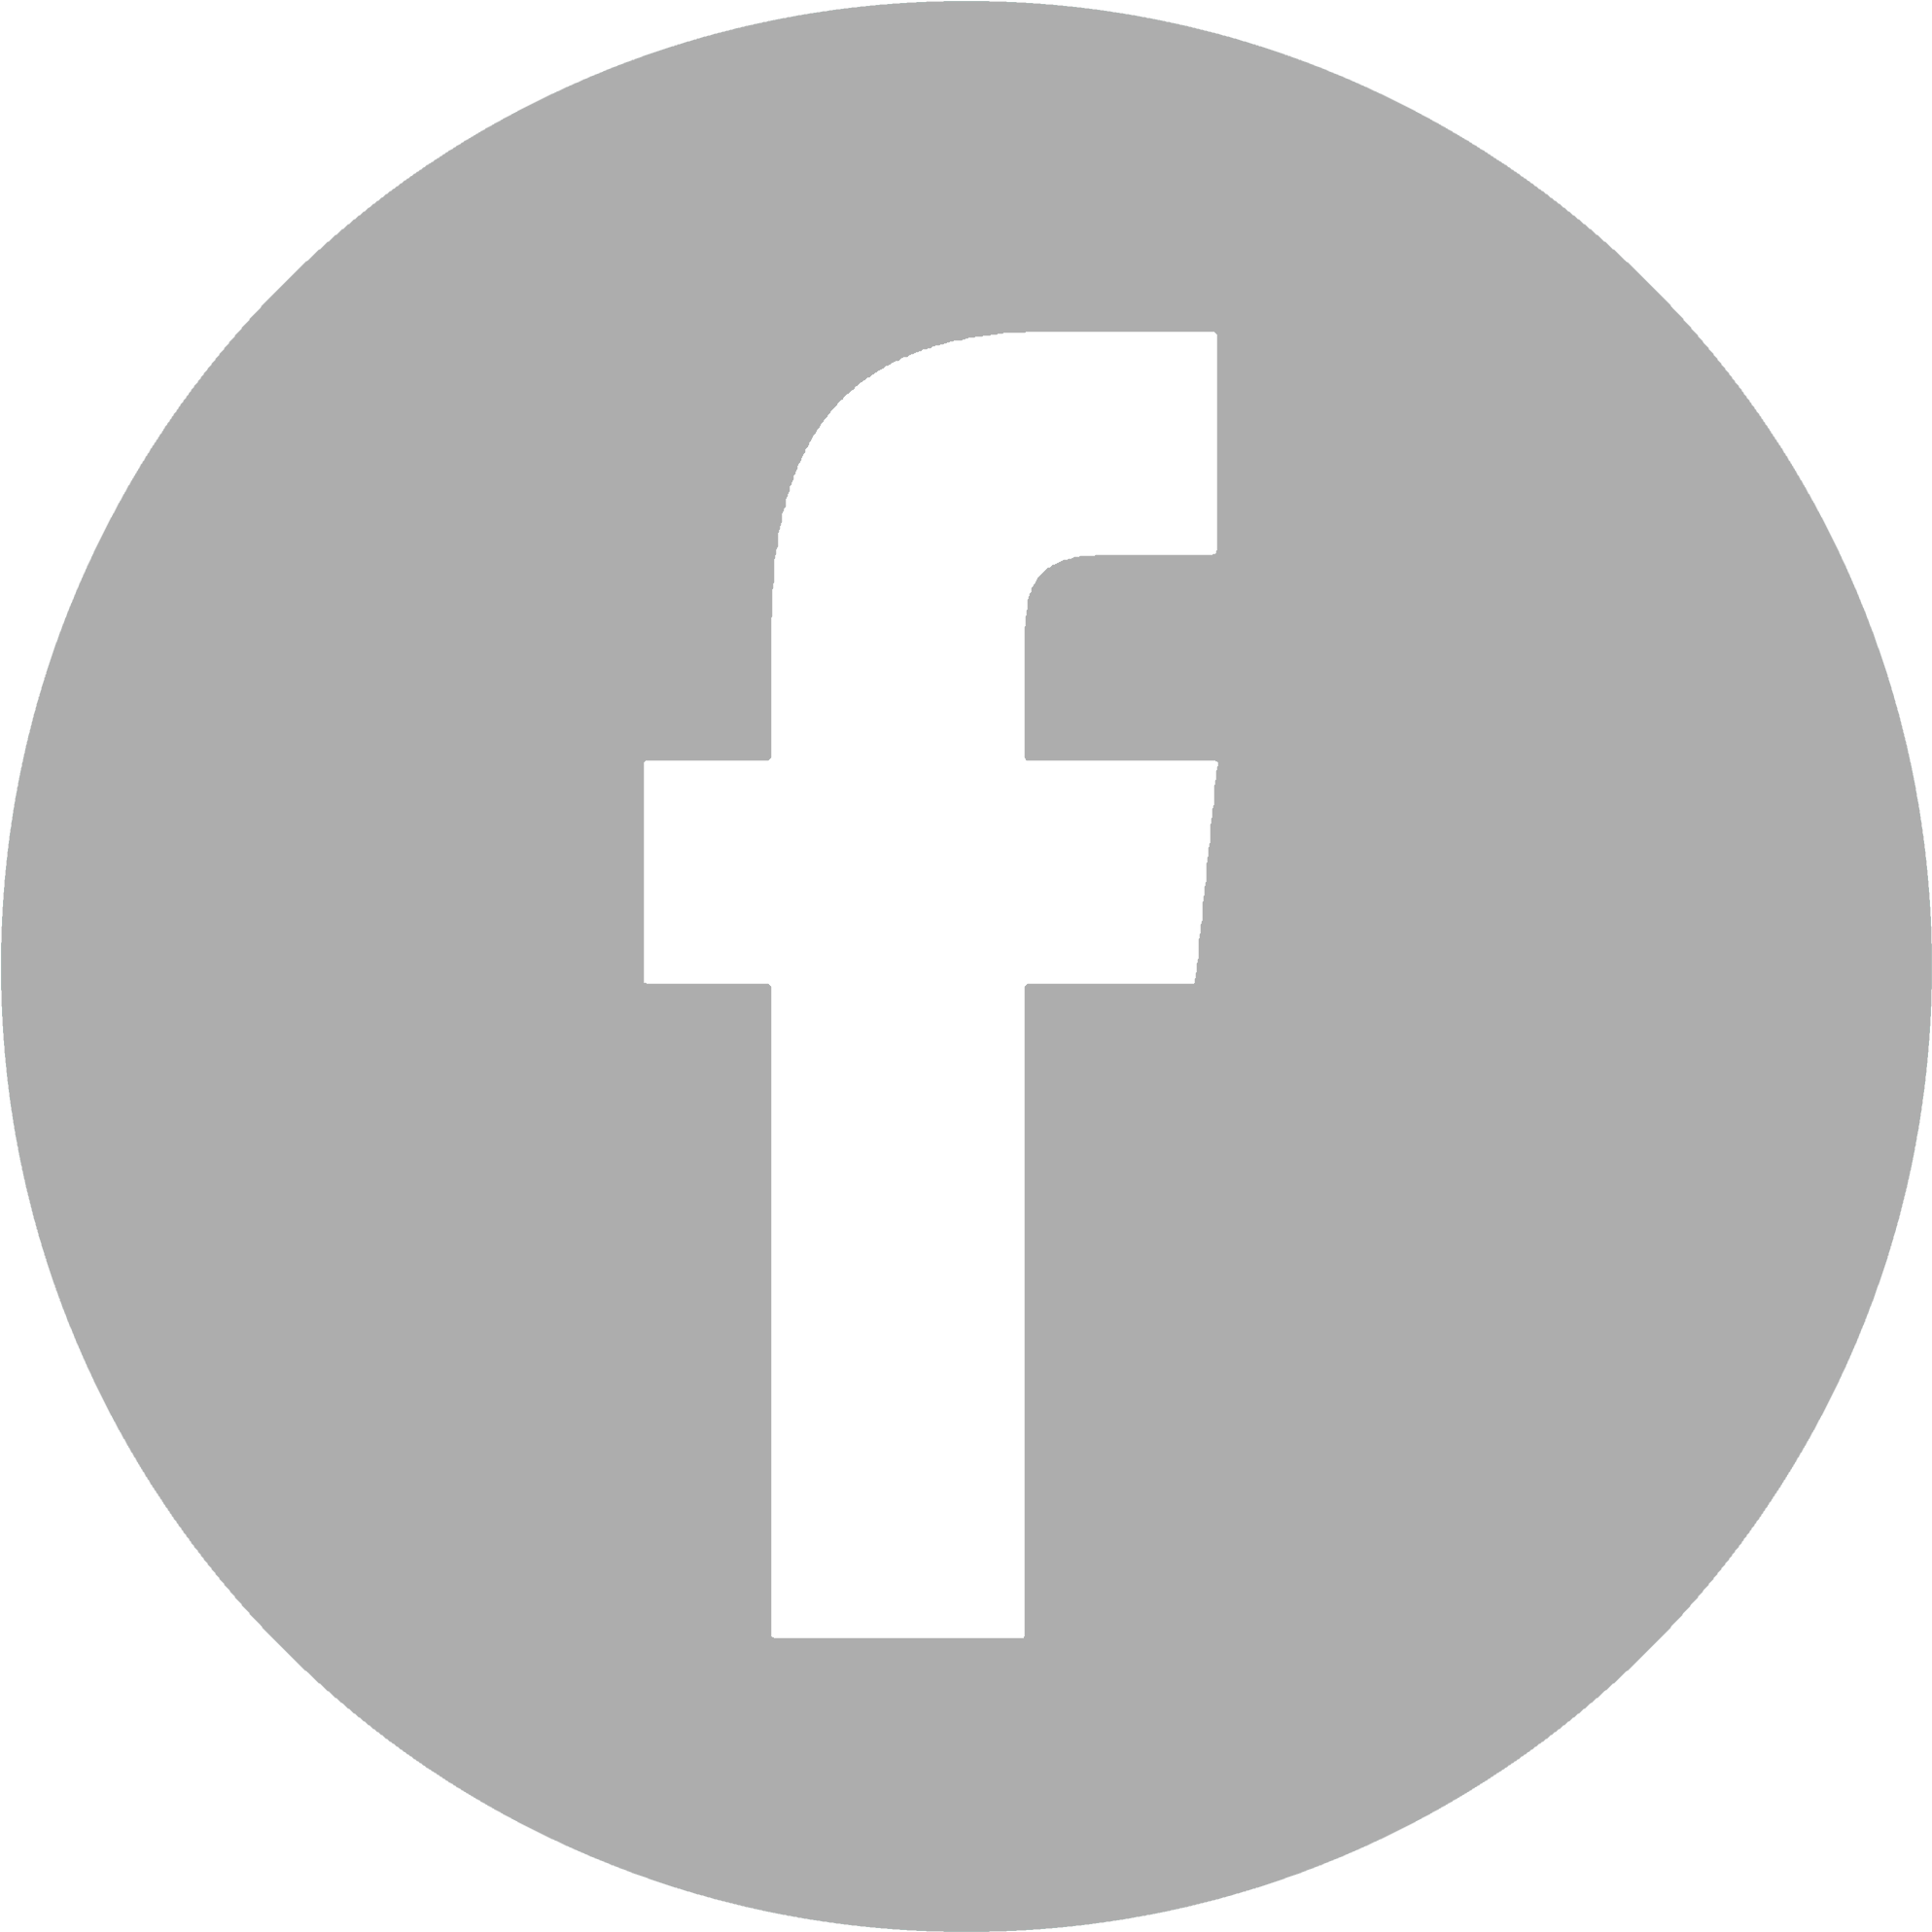 Download Circle Transparent Facebook Logo Grau Transparent Png Image With No Background Pngkey Com